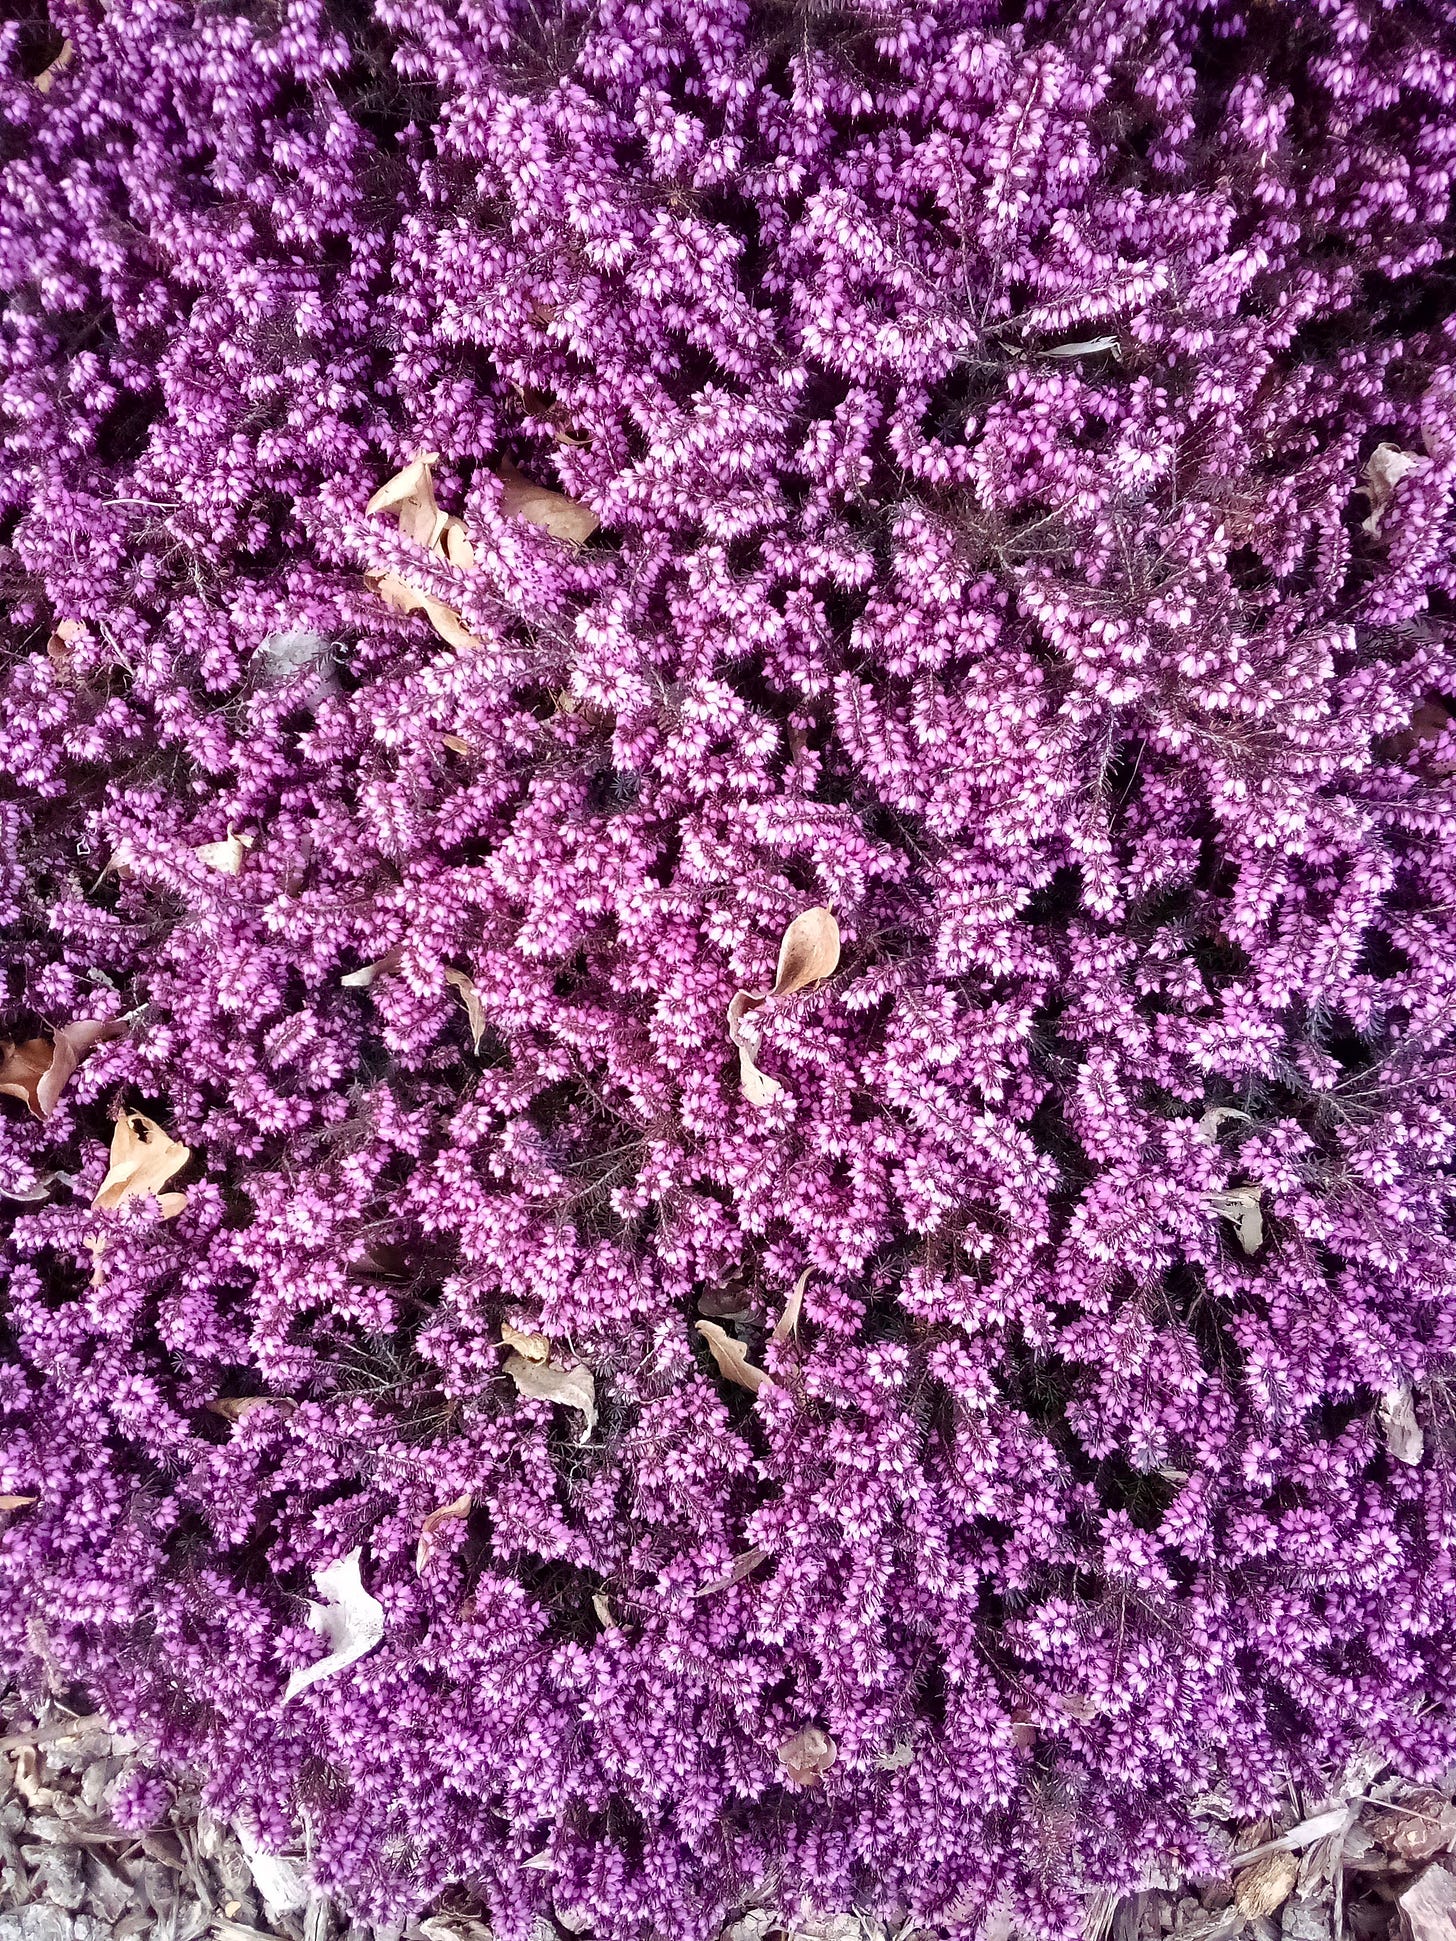 Purple heather blooming